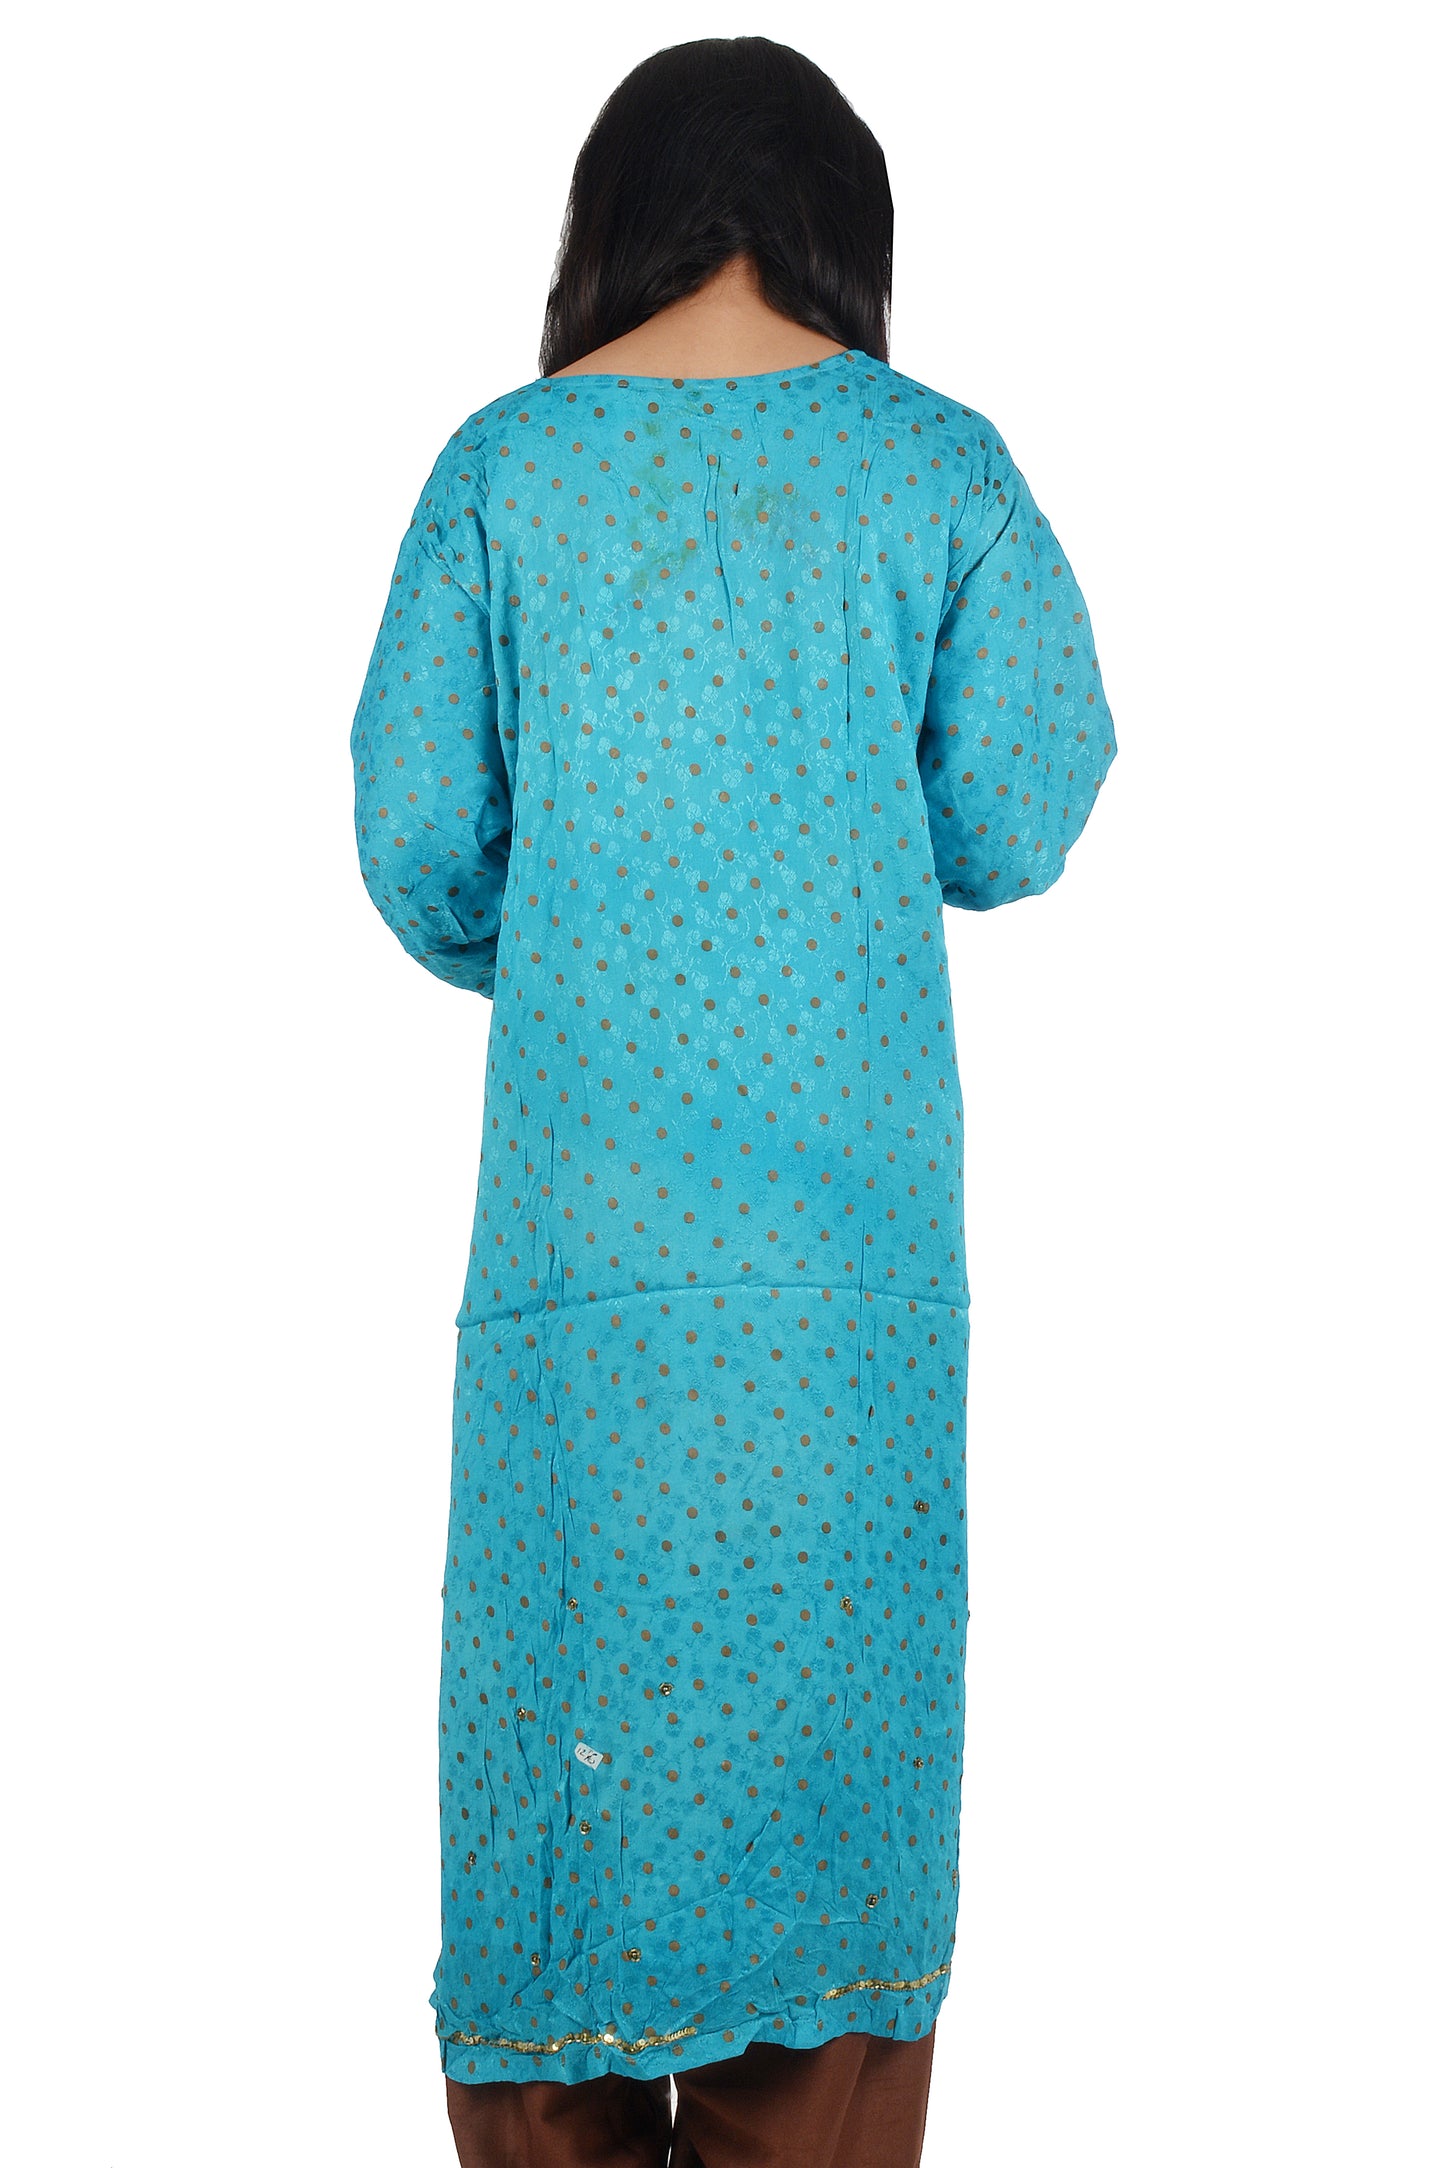 Blue High Quality Party Wear Salwar kameez Chest Size 46,56